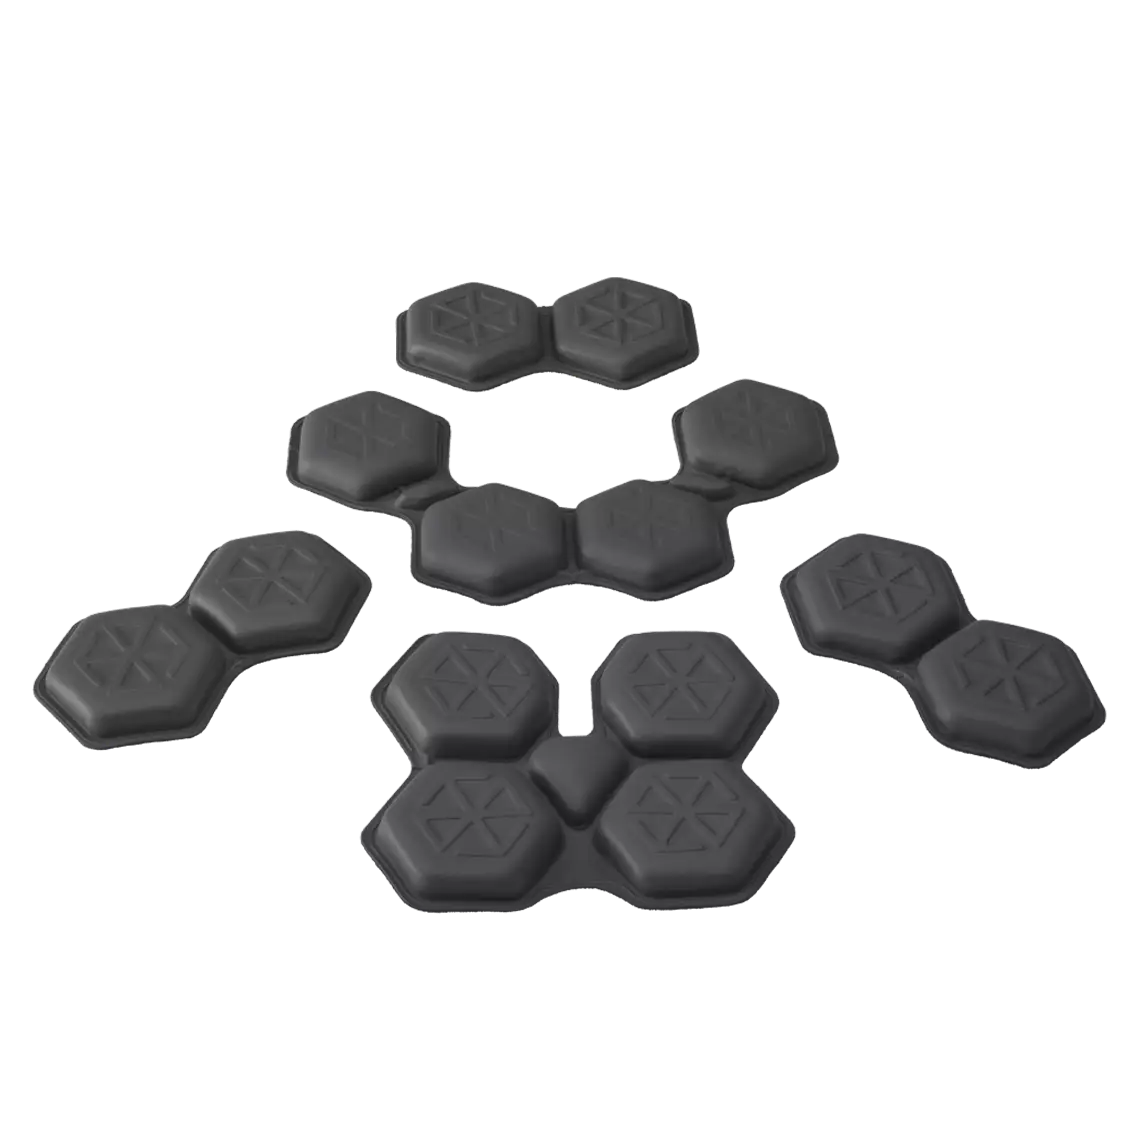 Black epic + / epic comfort pads for football helmets.